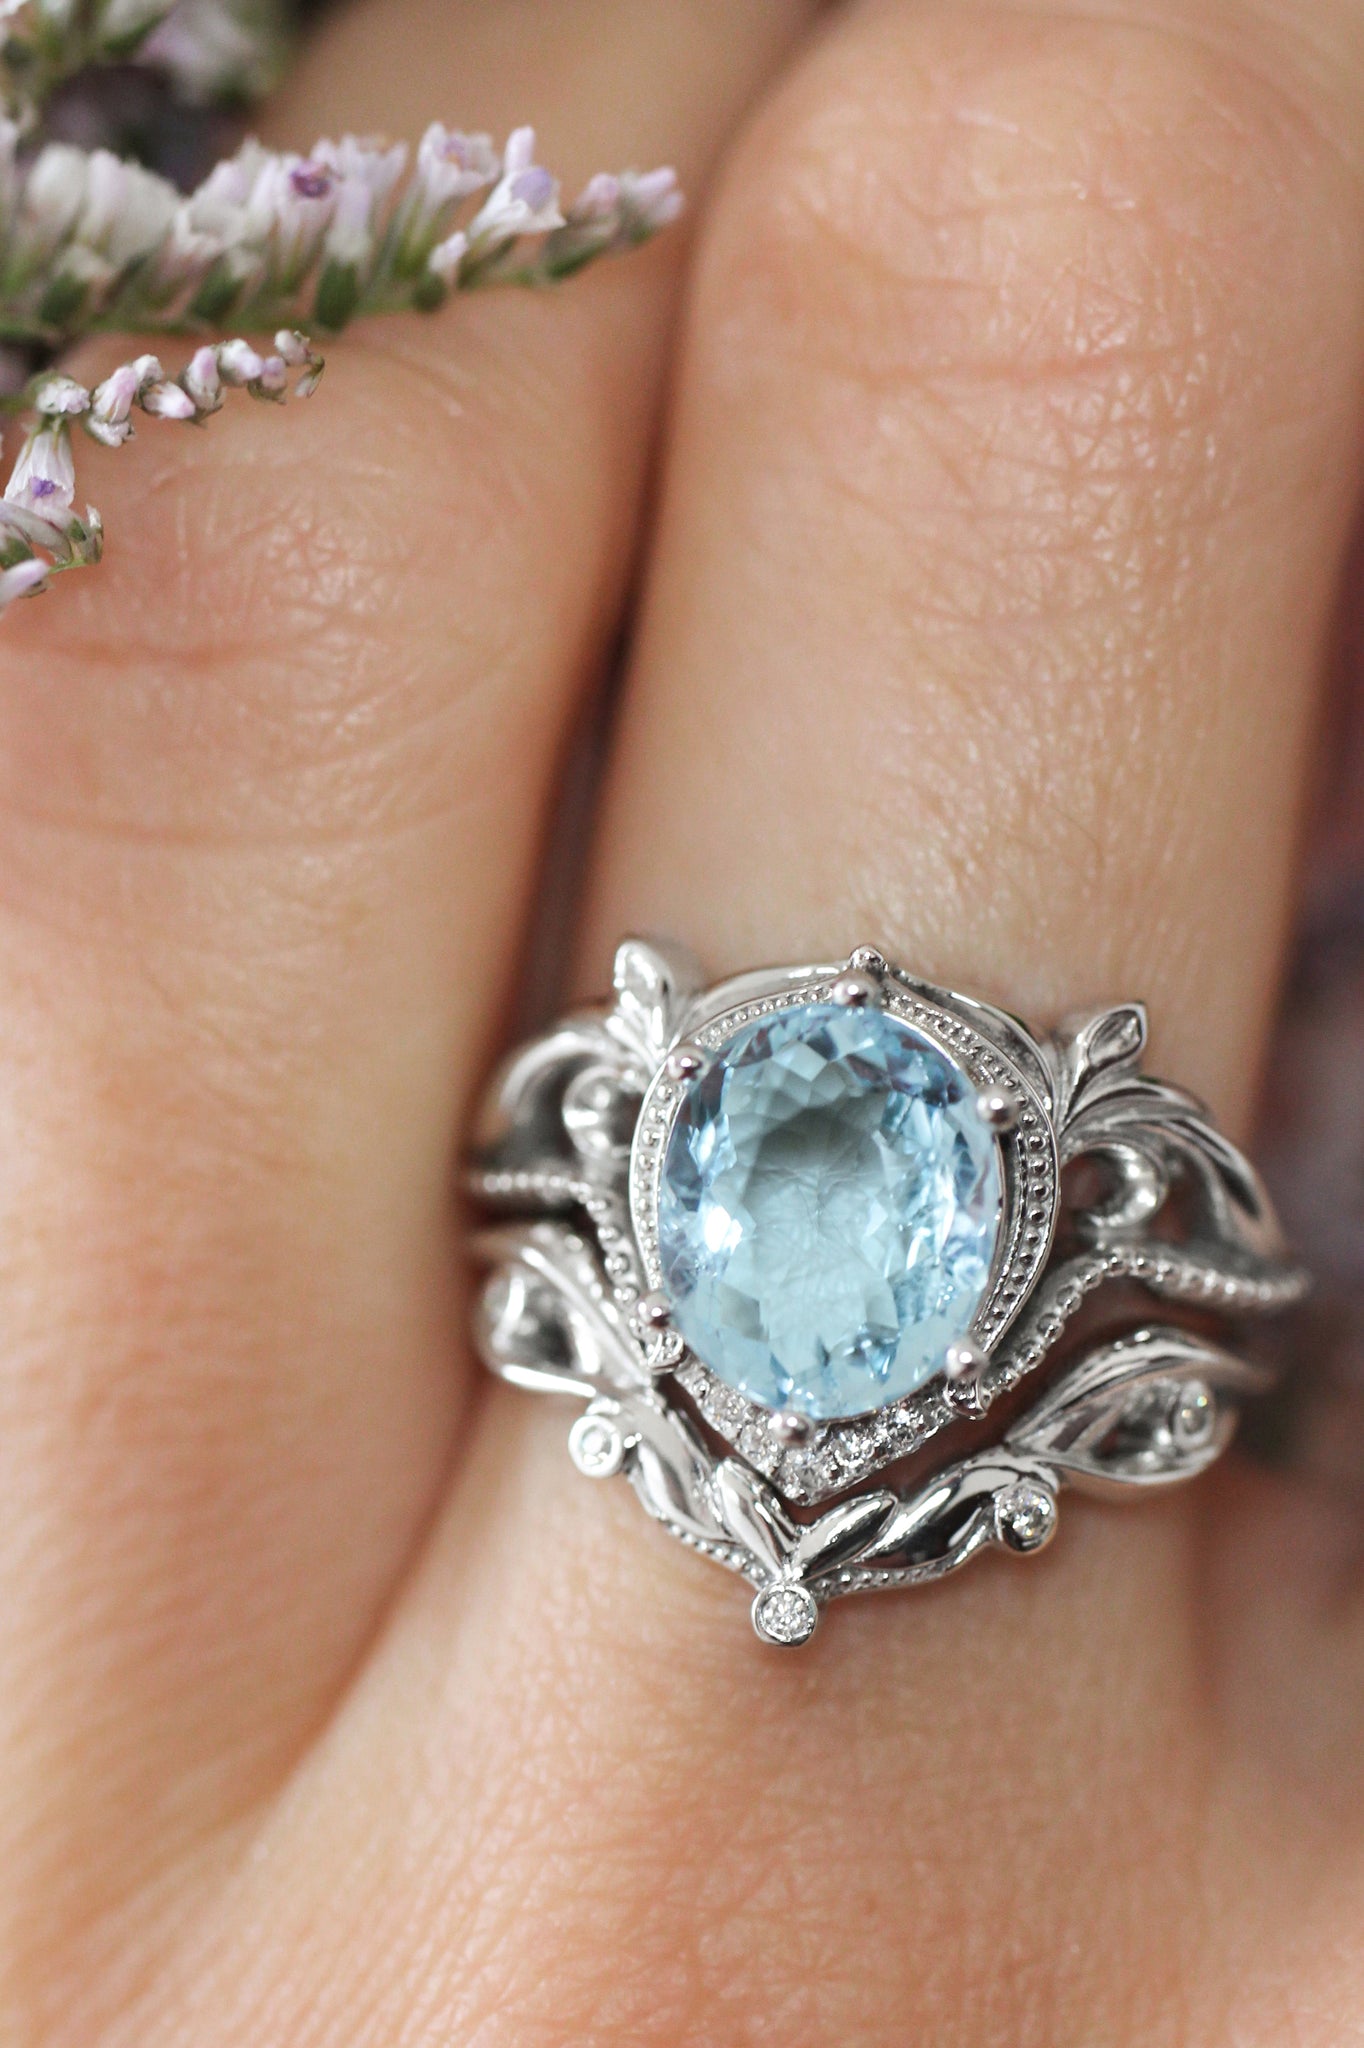 Art nouveau bridal ring set with aquamarine / Lida oval - Eden Garden Jewelry™